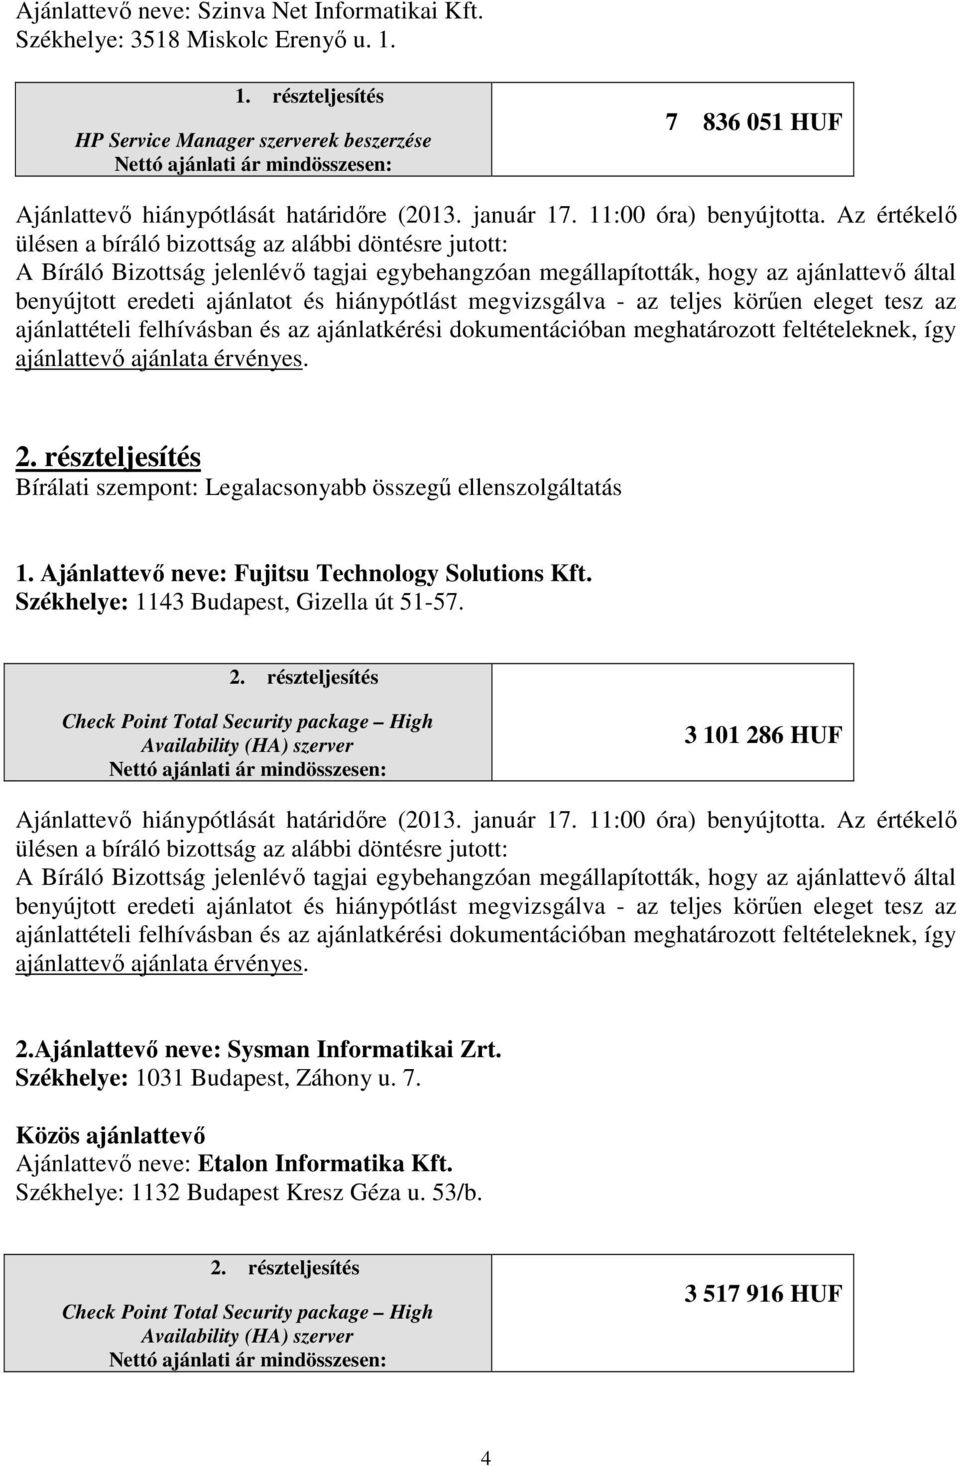 Ajánlattevő neve: Fujitsu Technology Solutions Kft. Székhelye: 1143 Budapest, Gizella út 51-57.